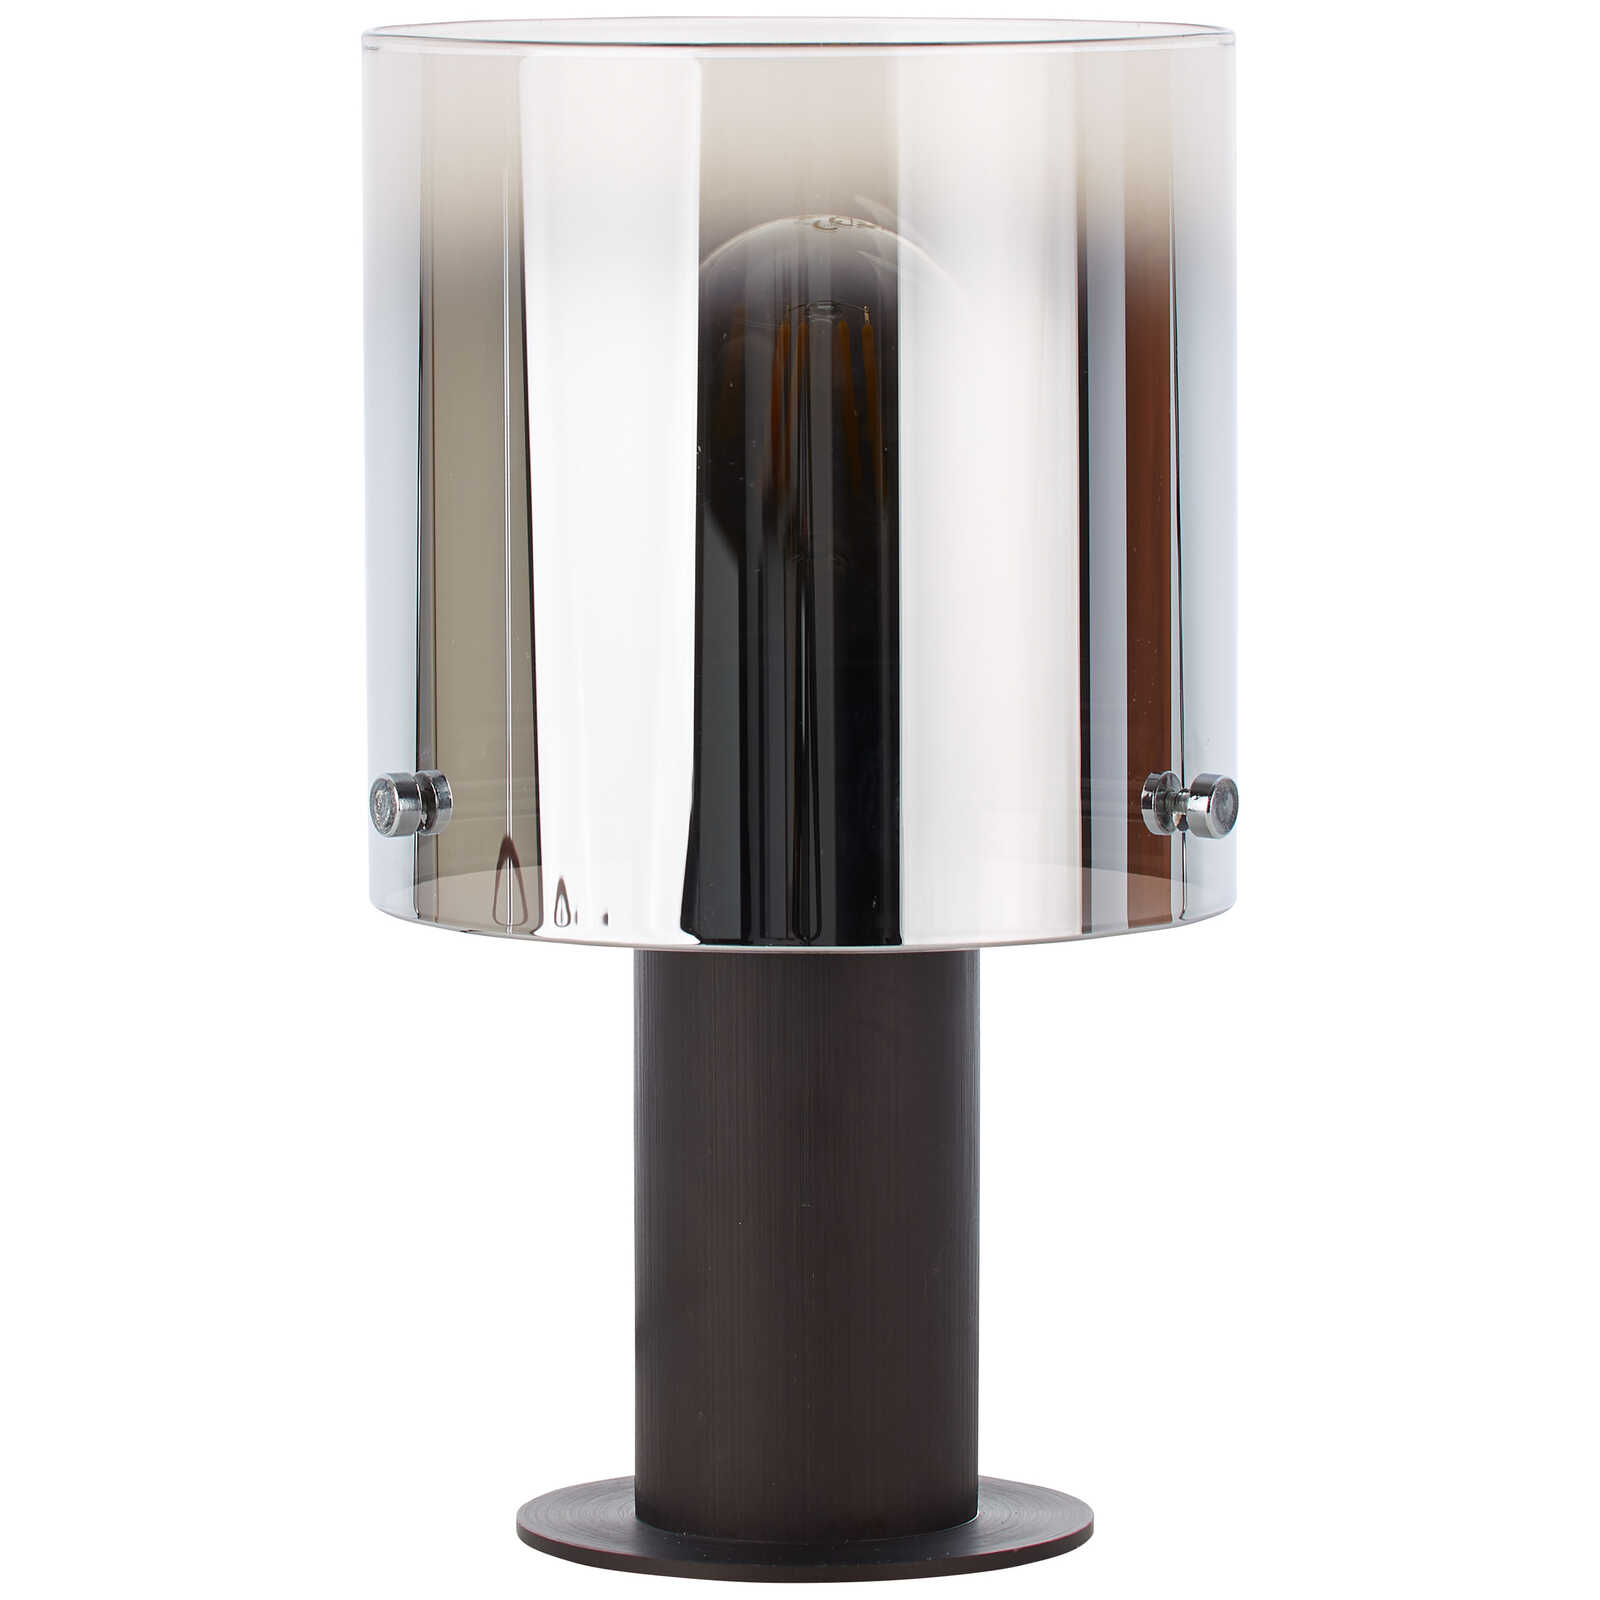             Glazen tafellamp - Benett 1 - Bruin
        